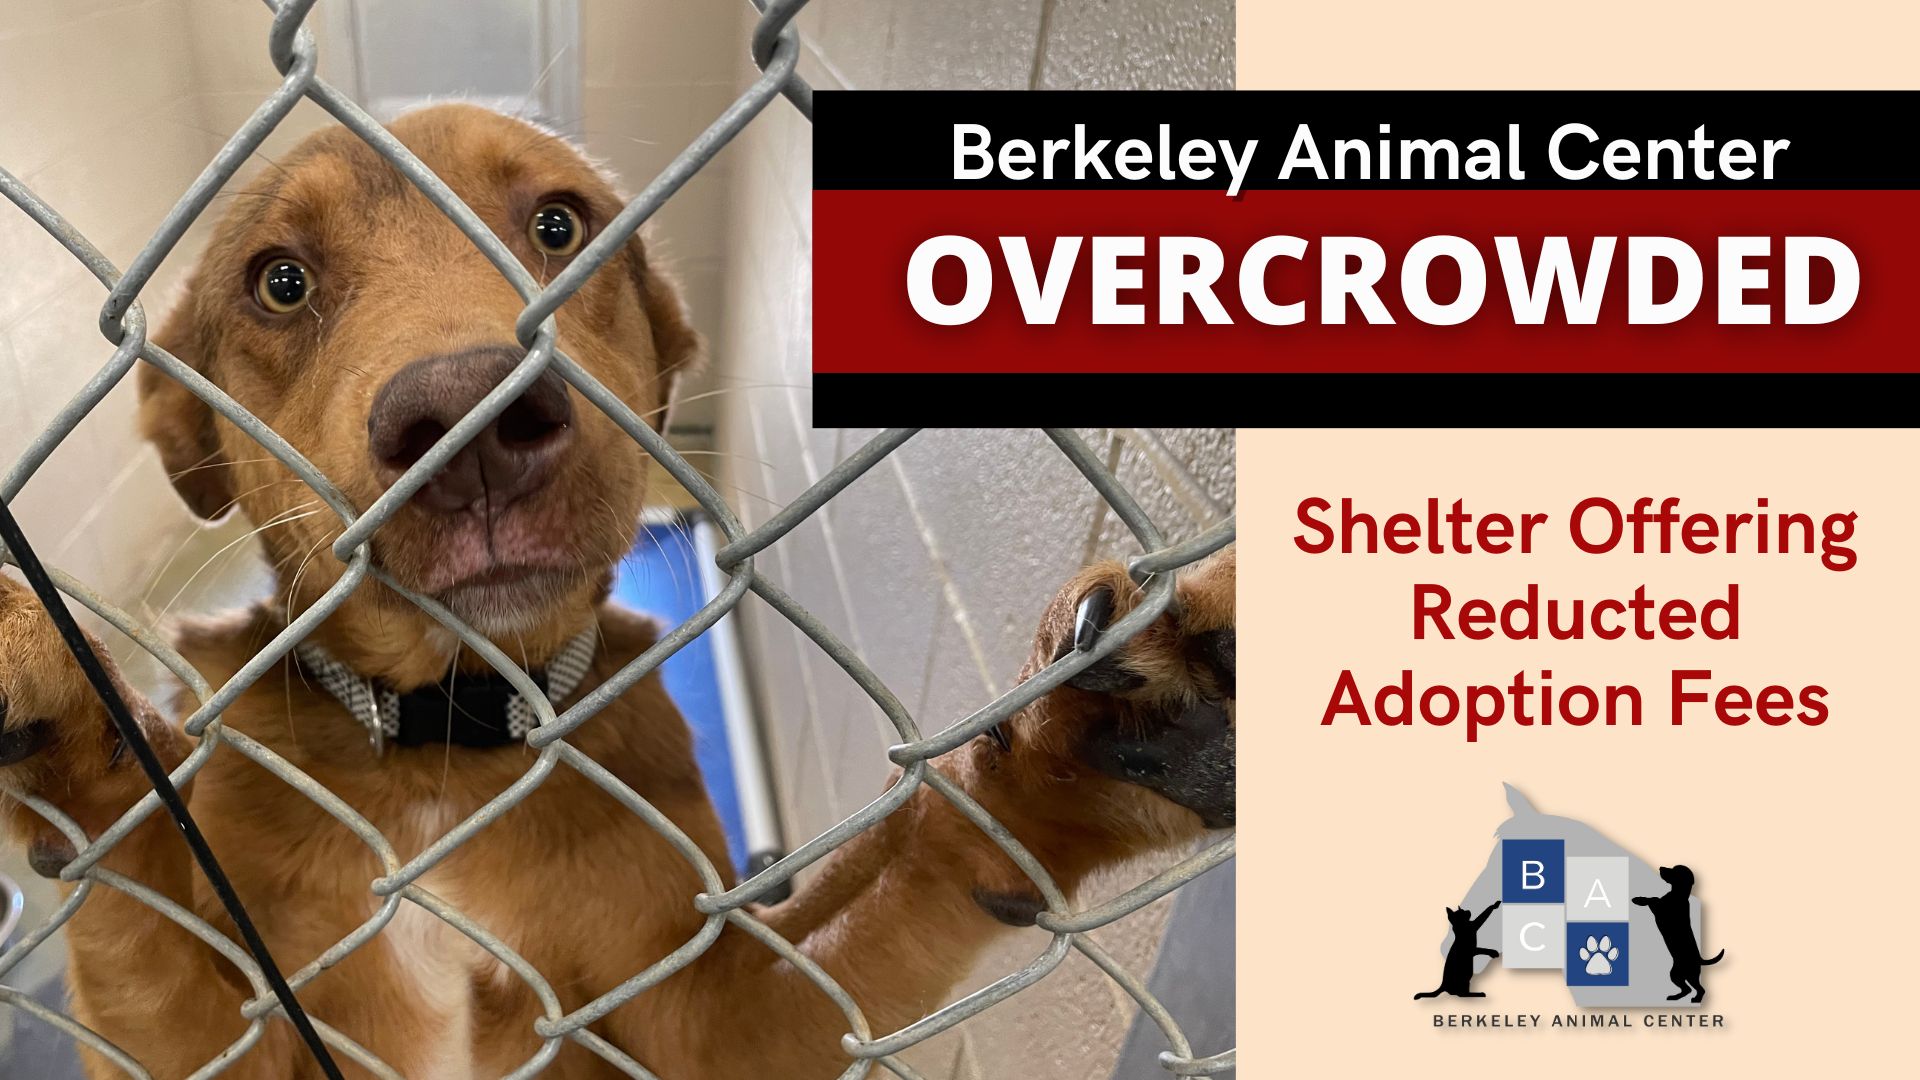 Berkeley Animal Center Issues Urgent Plea Amid Severe Overcrowding